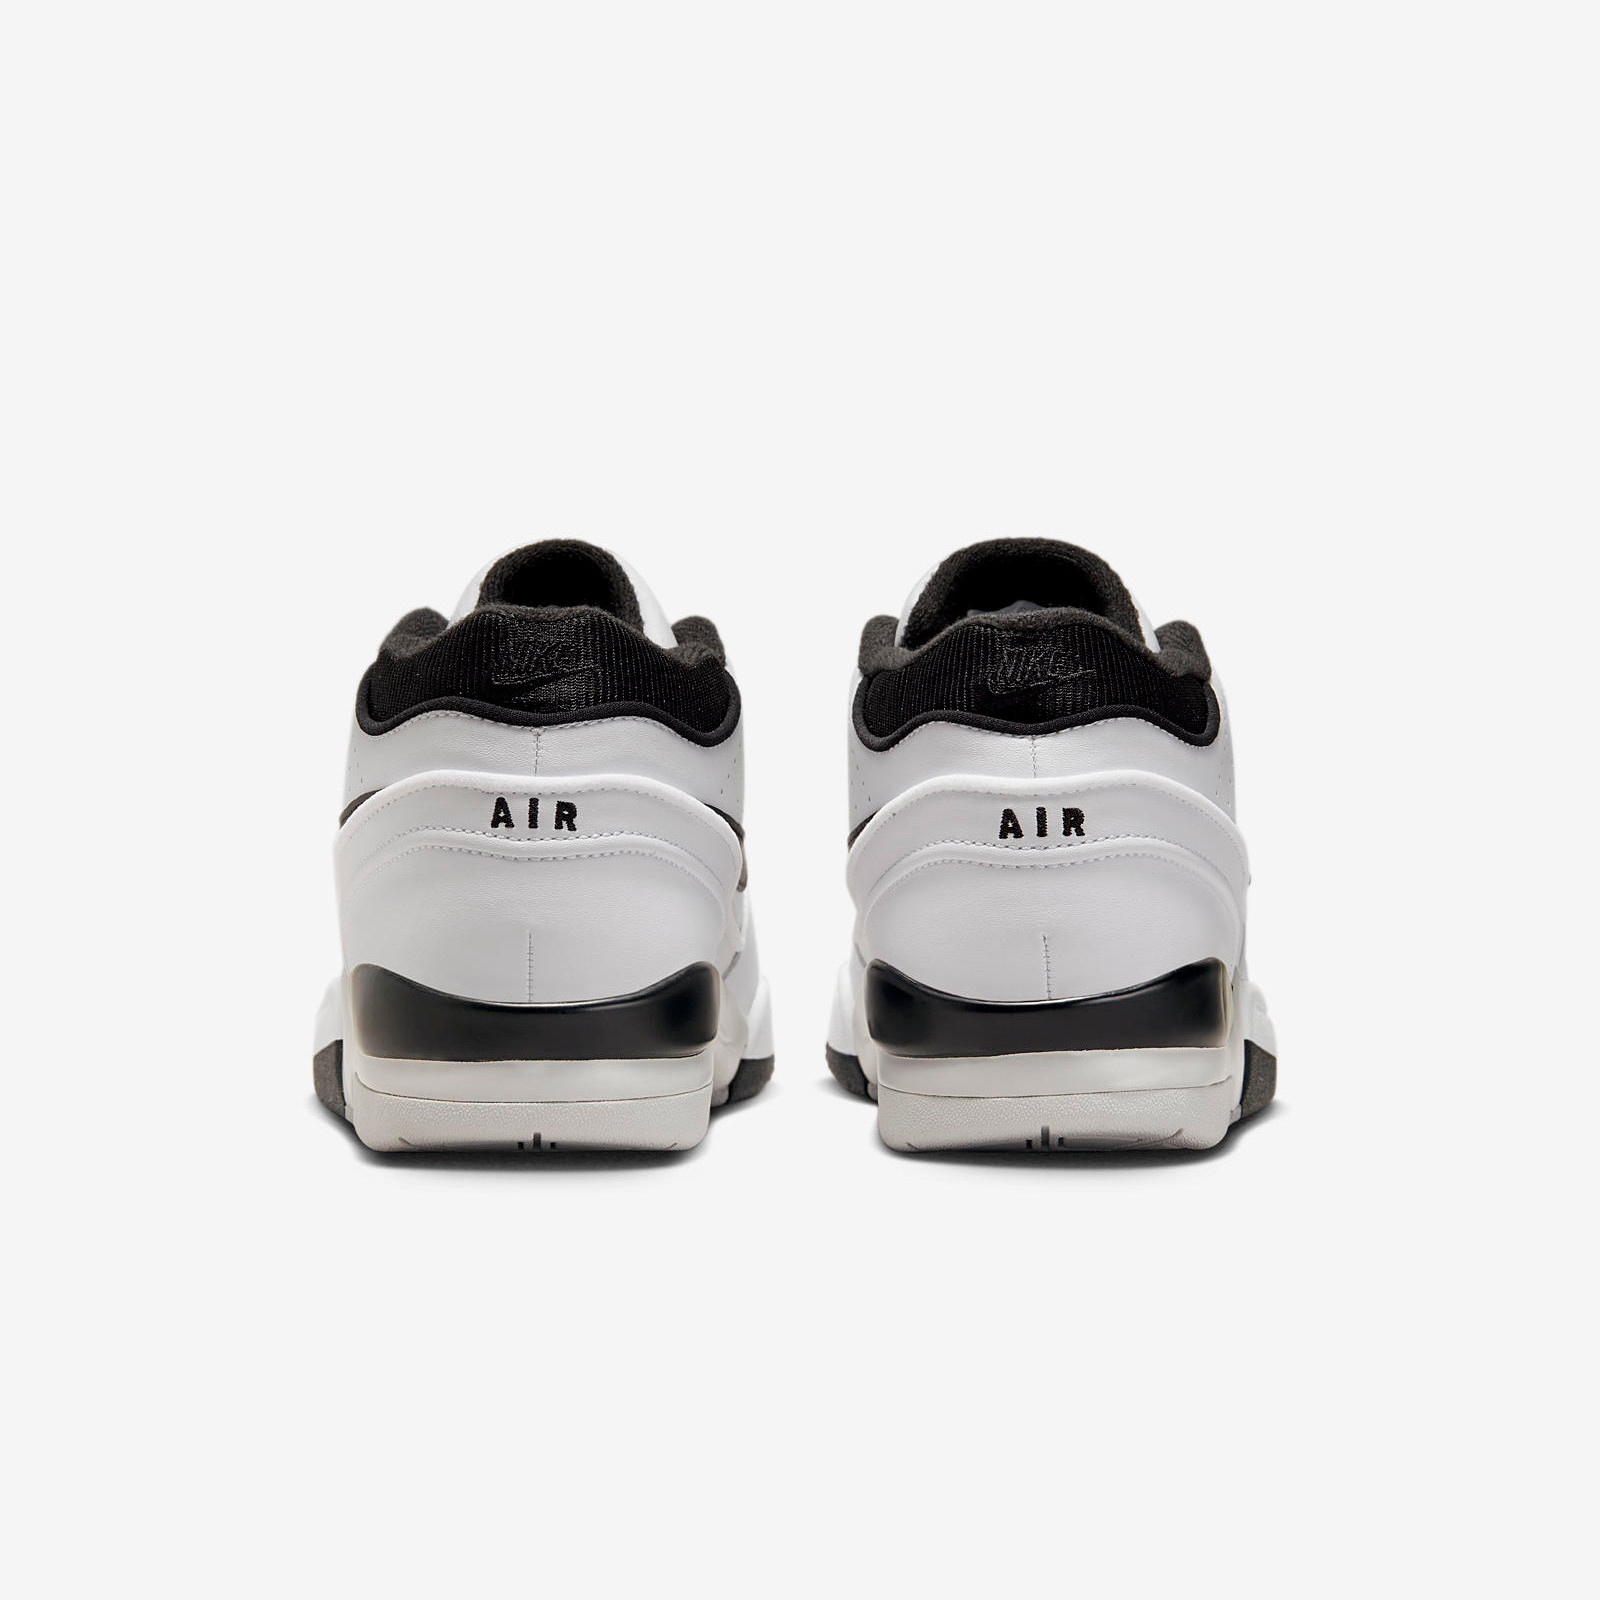 Billie x Nike
Air Alpha Force 88
Black / White